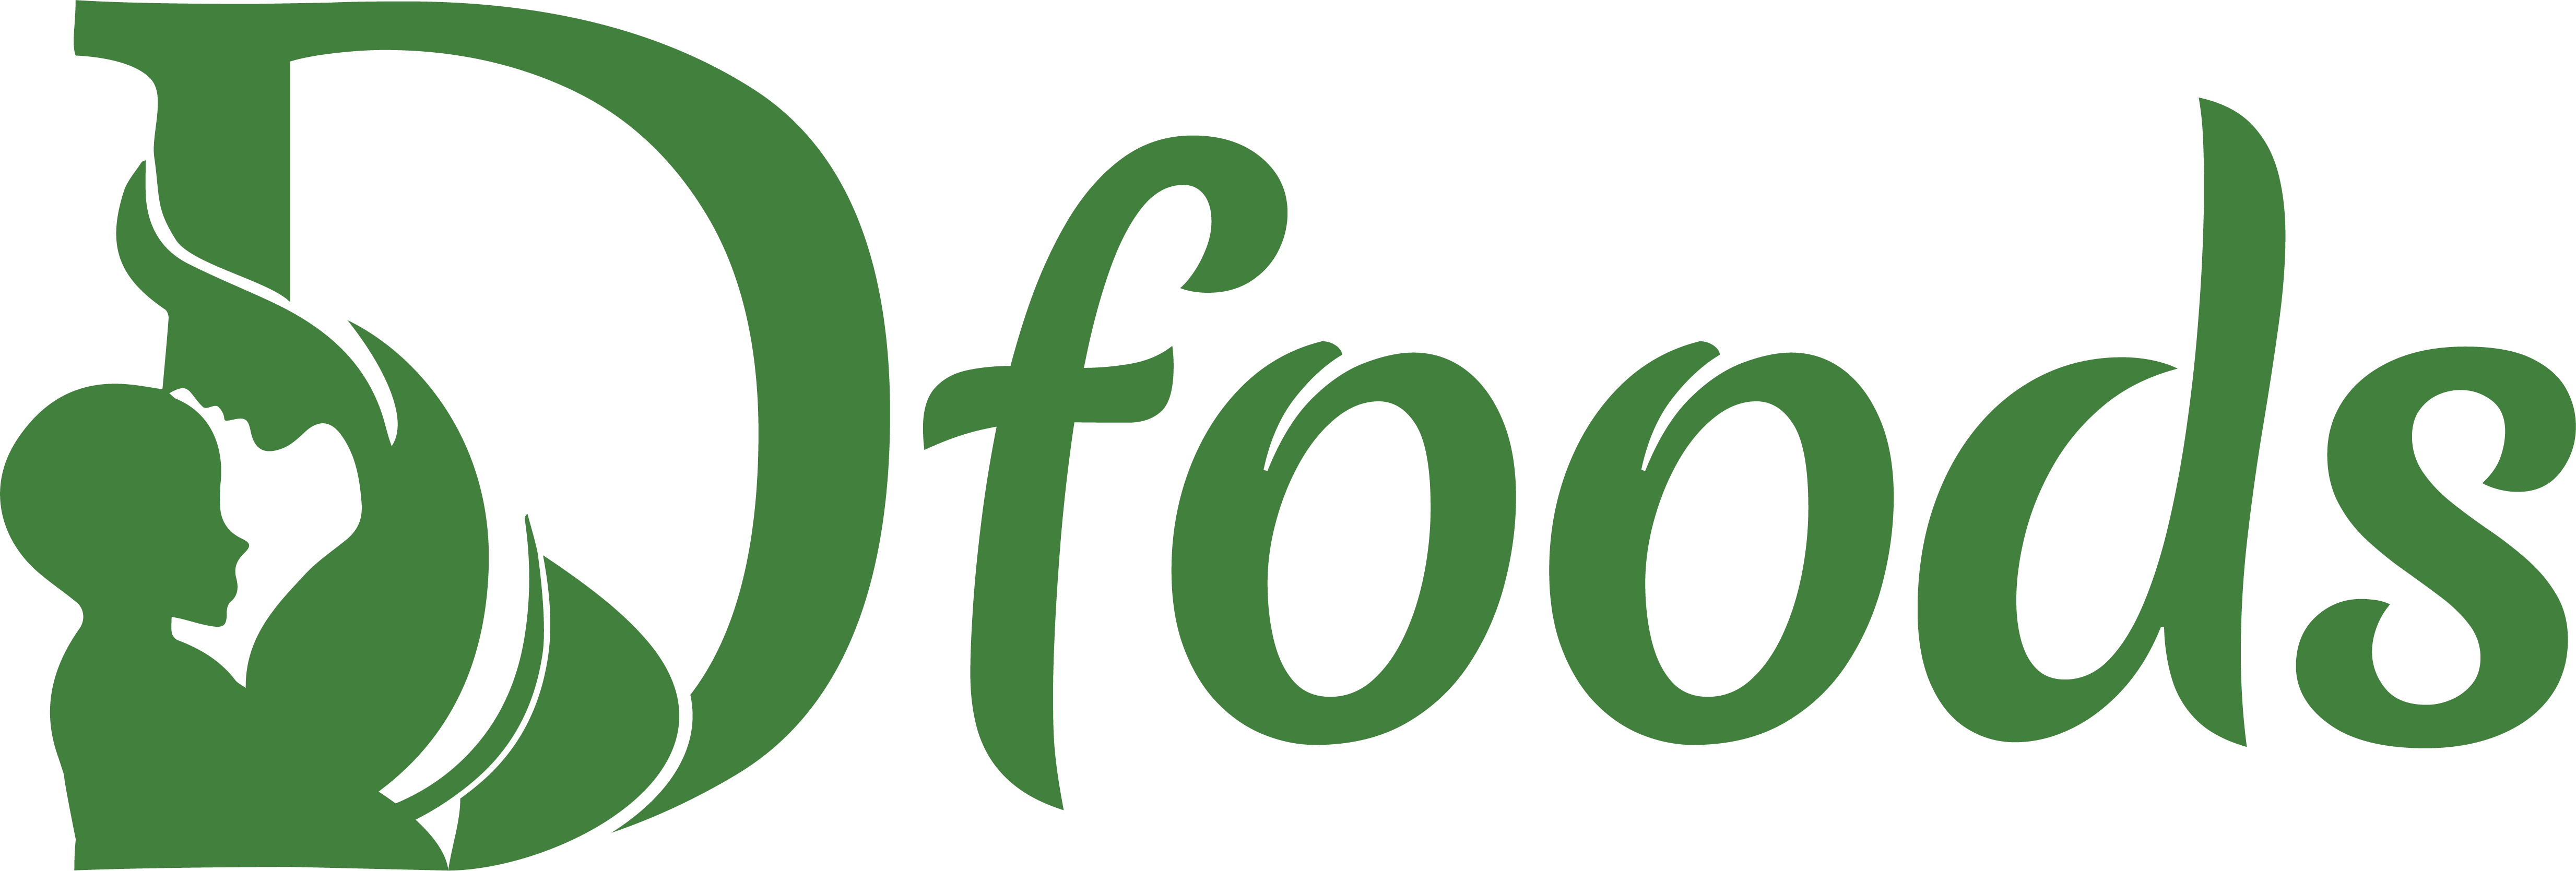 logo Dfoods